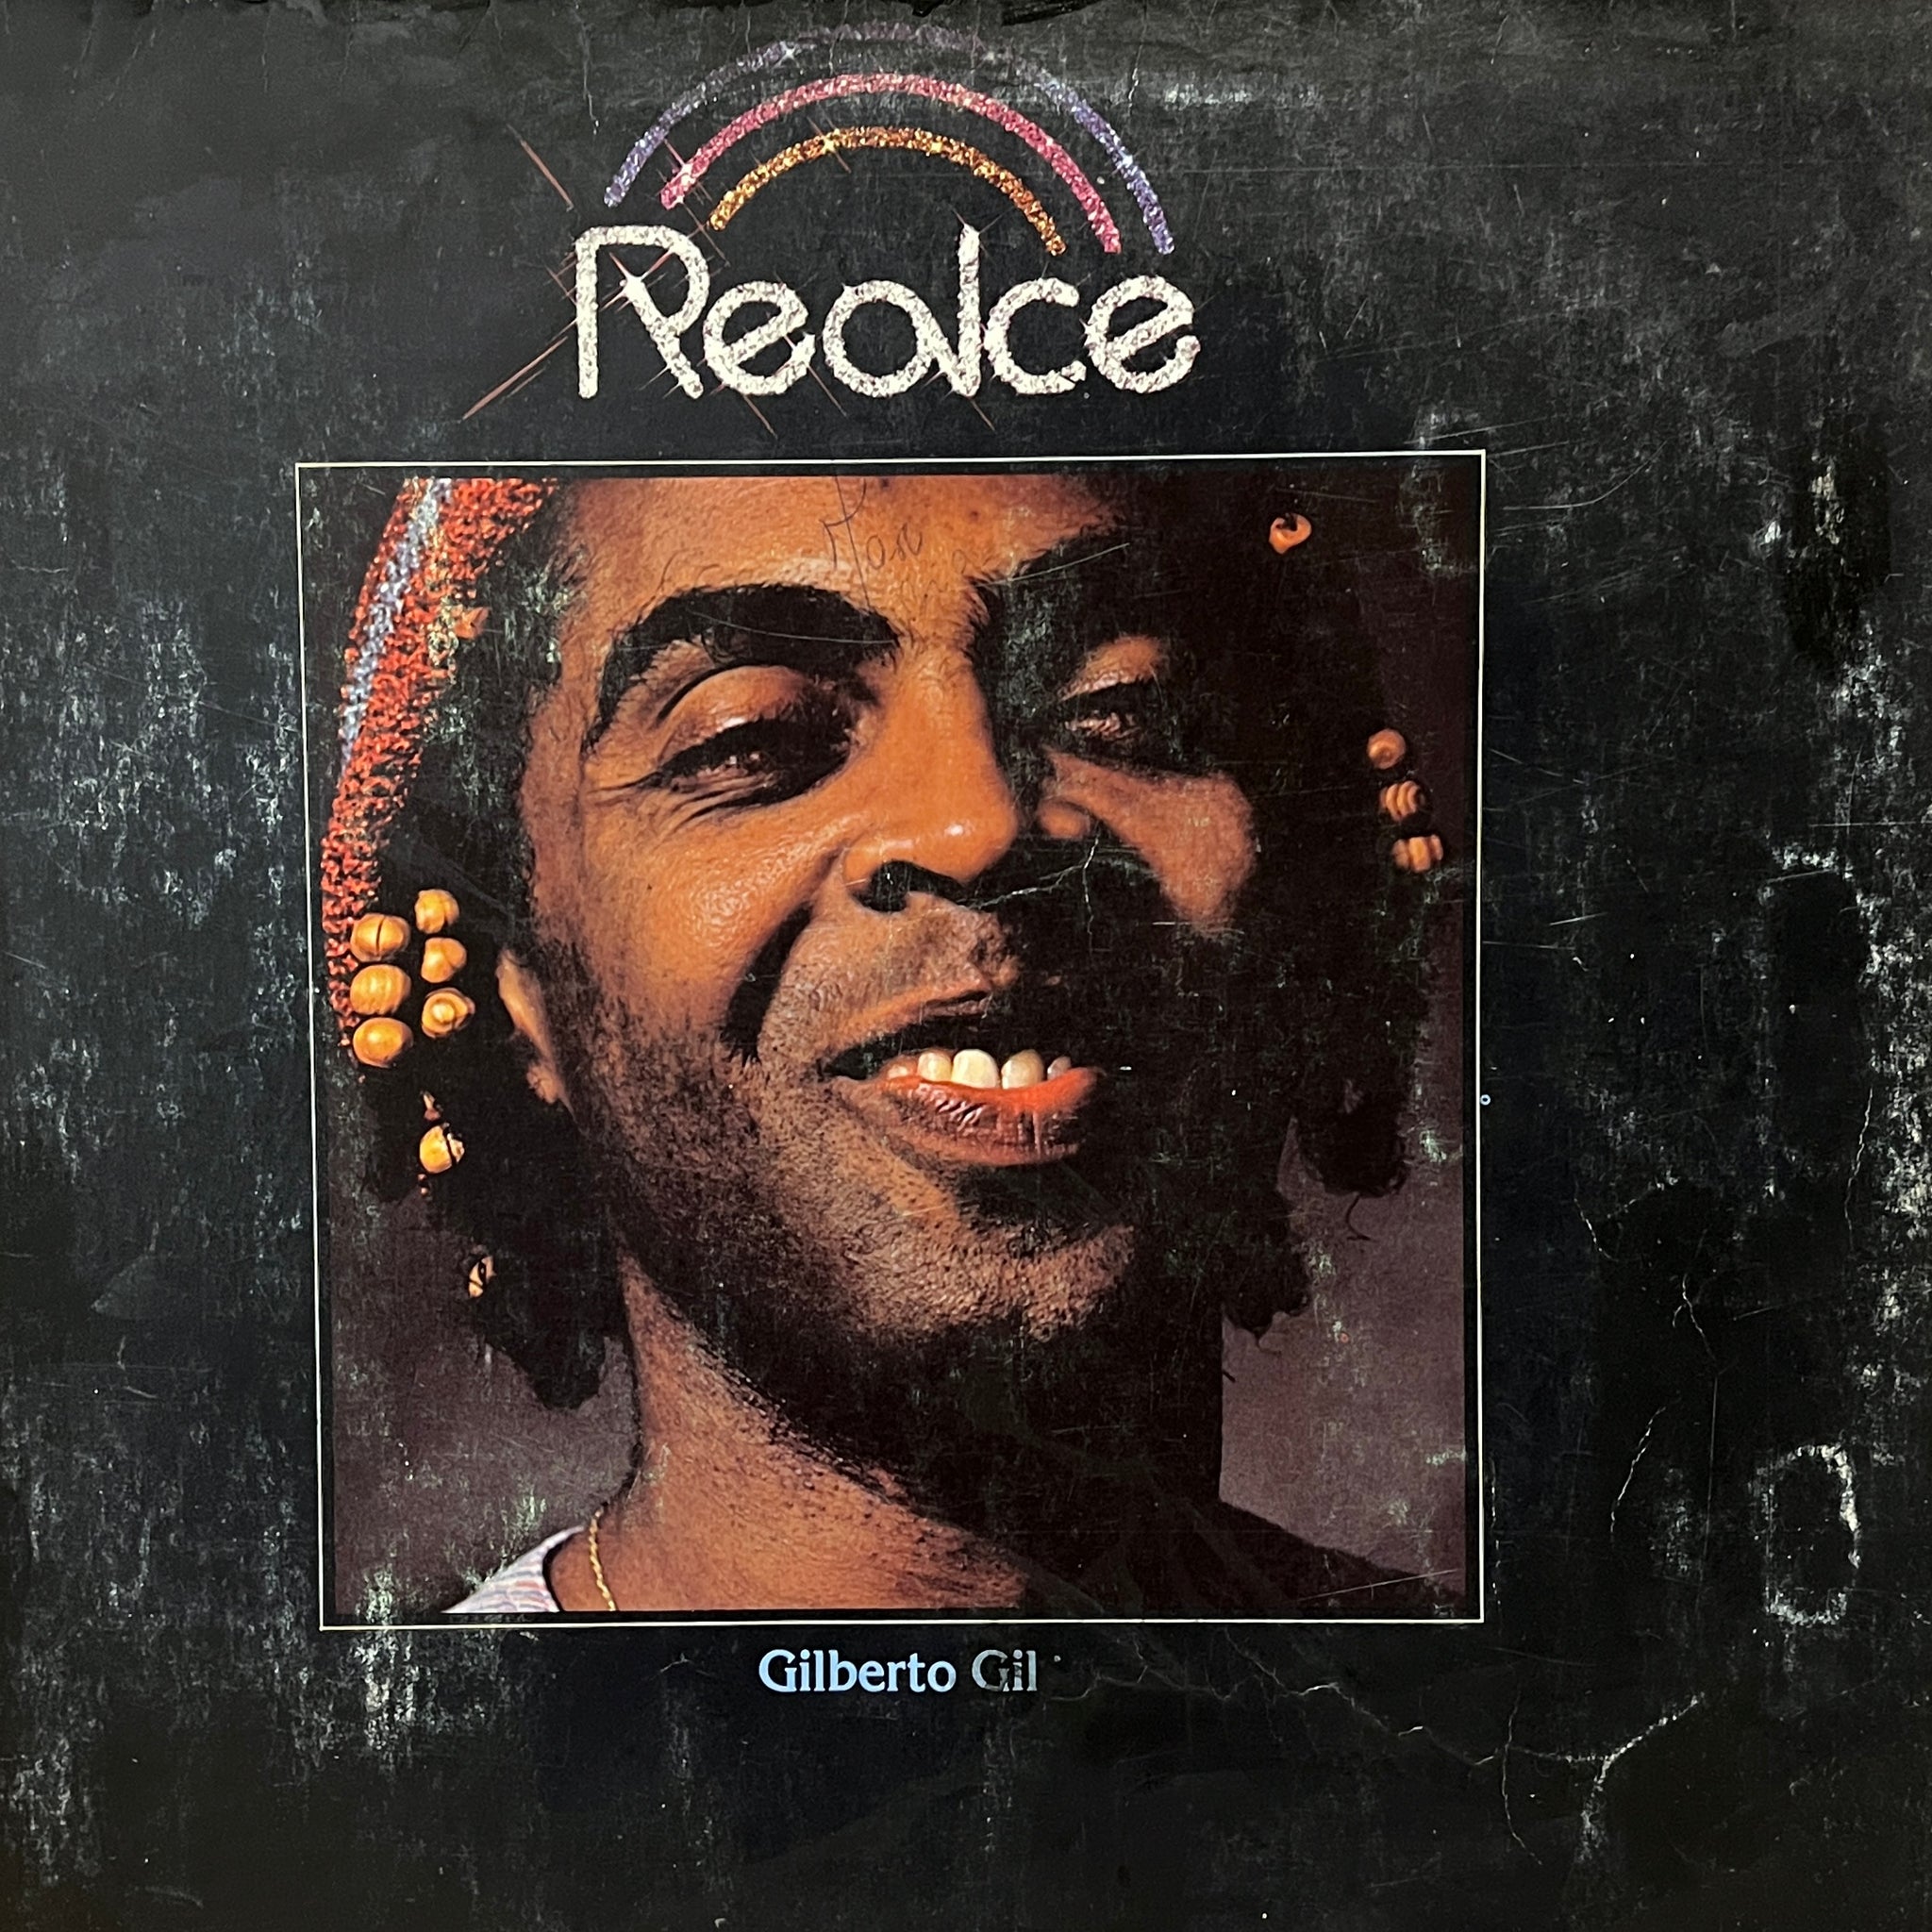 Gilberto Gil – Realce